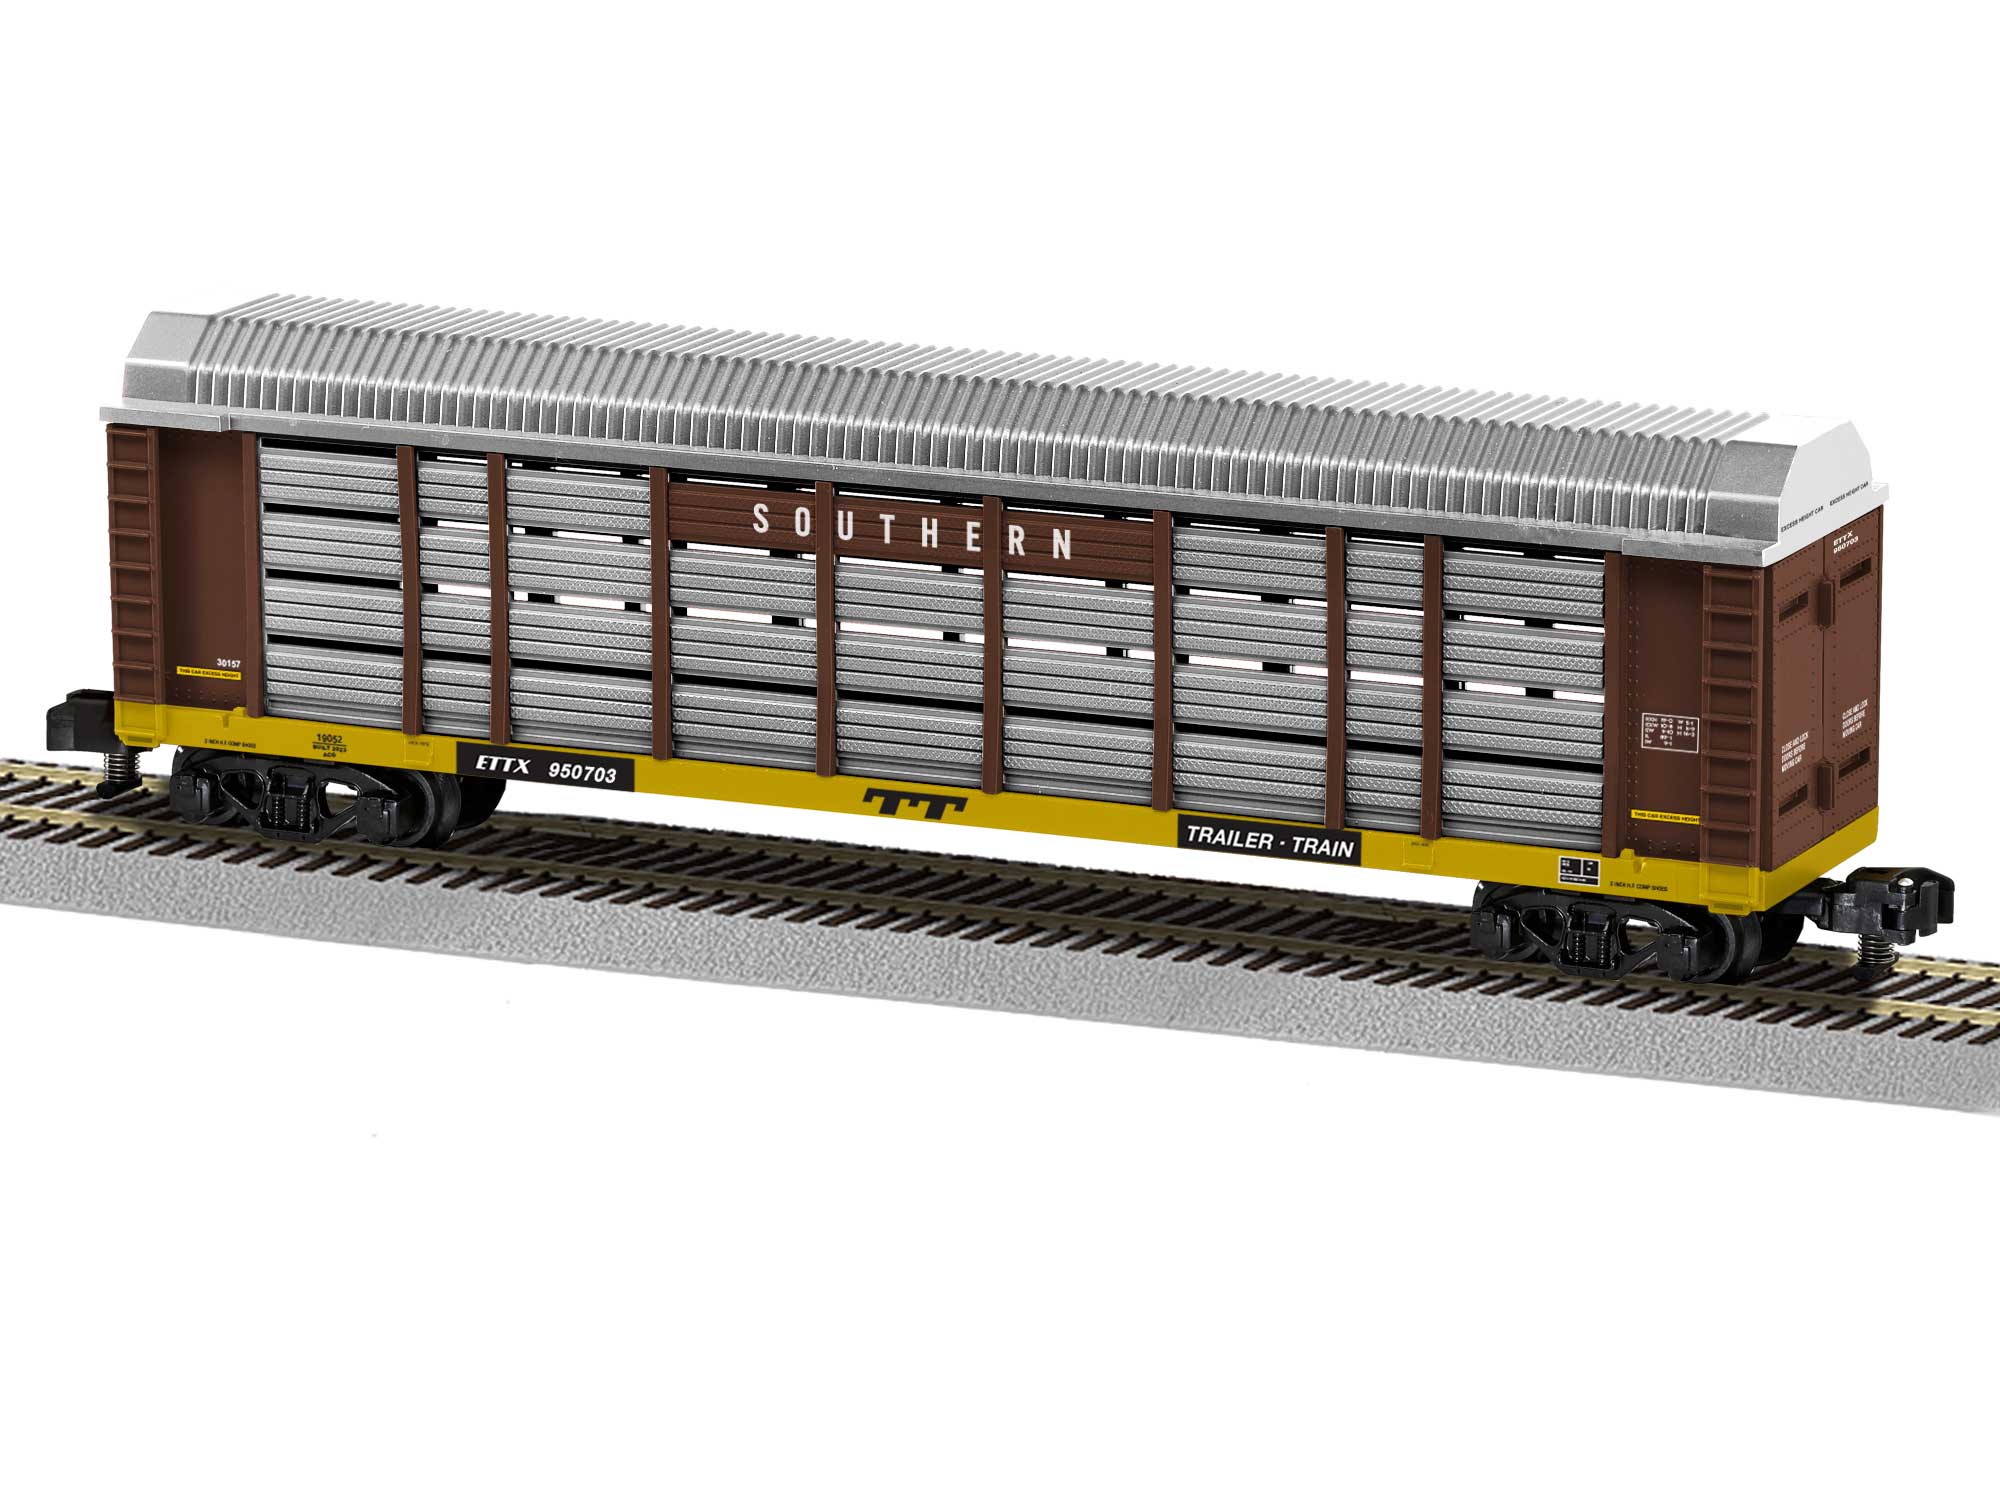 Lionel Model Trains: Train Cars